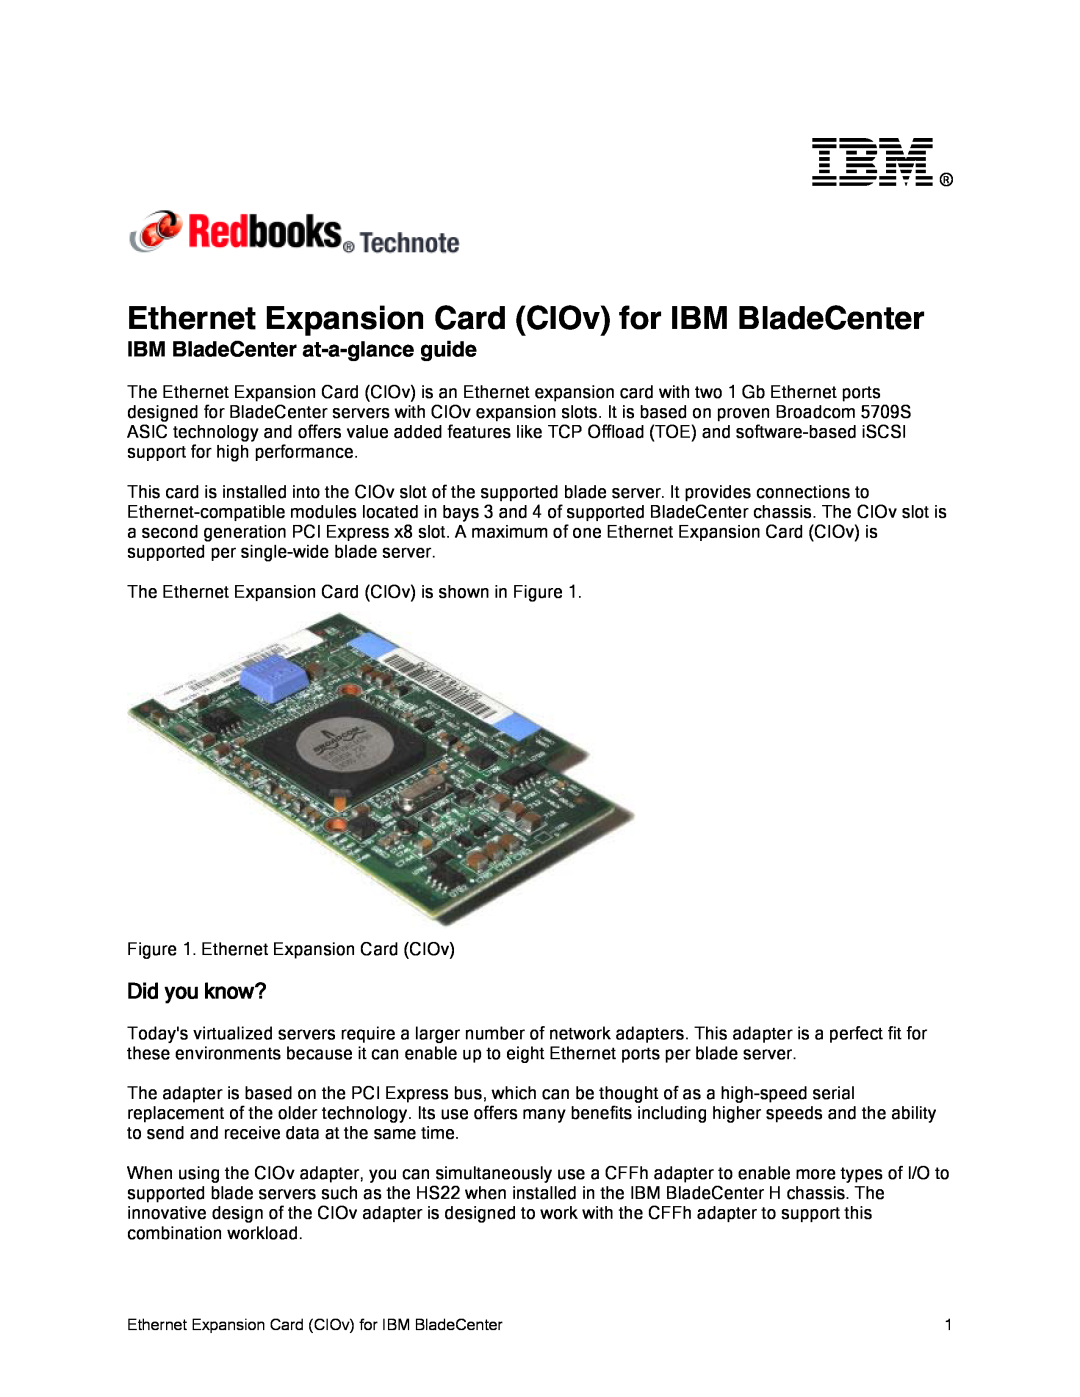 IBM manual Ethernet Expansion Card CIOv for IBM BladeCenter, Did you know?, IBM BladeCenter at-a-glance guide 